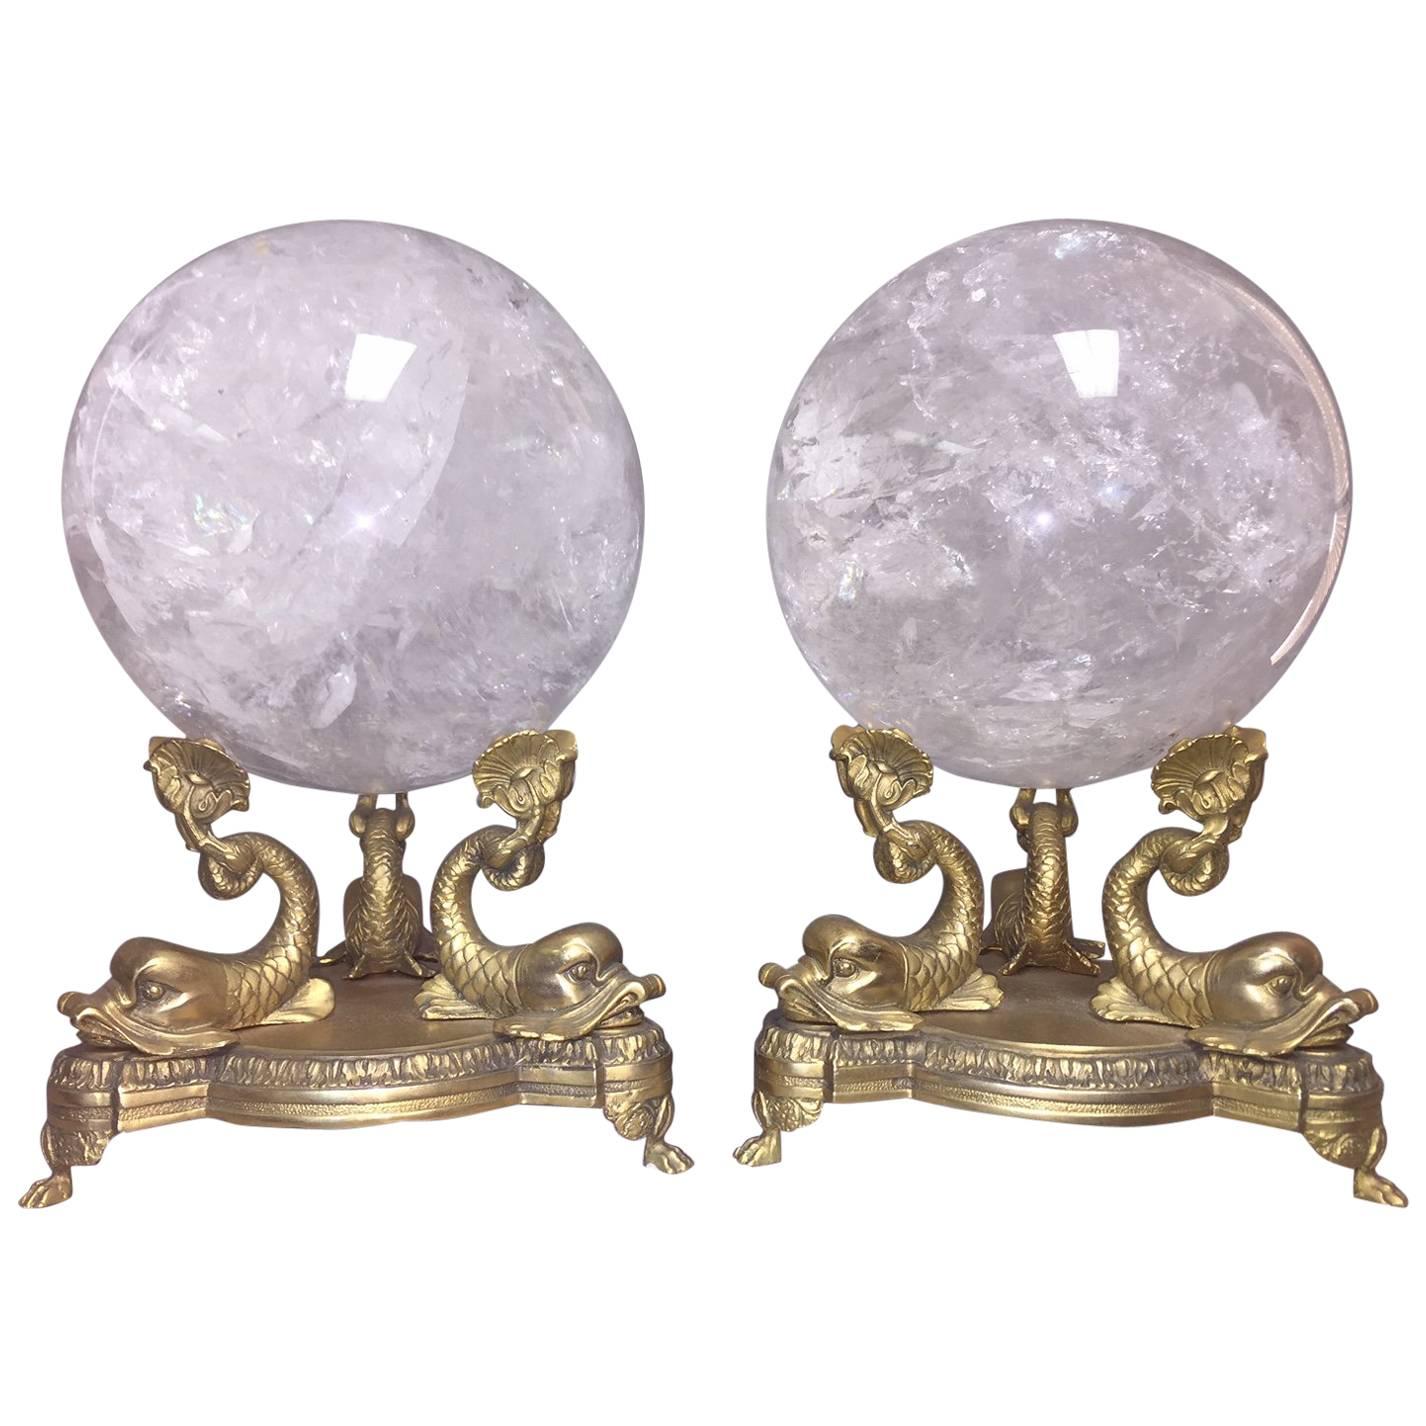 Pair of Neoclassical Rock Crystal Spheres on Bronze Bases